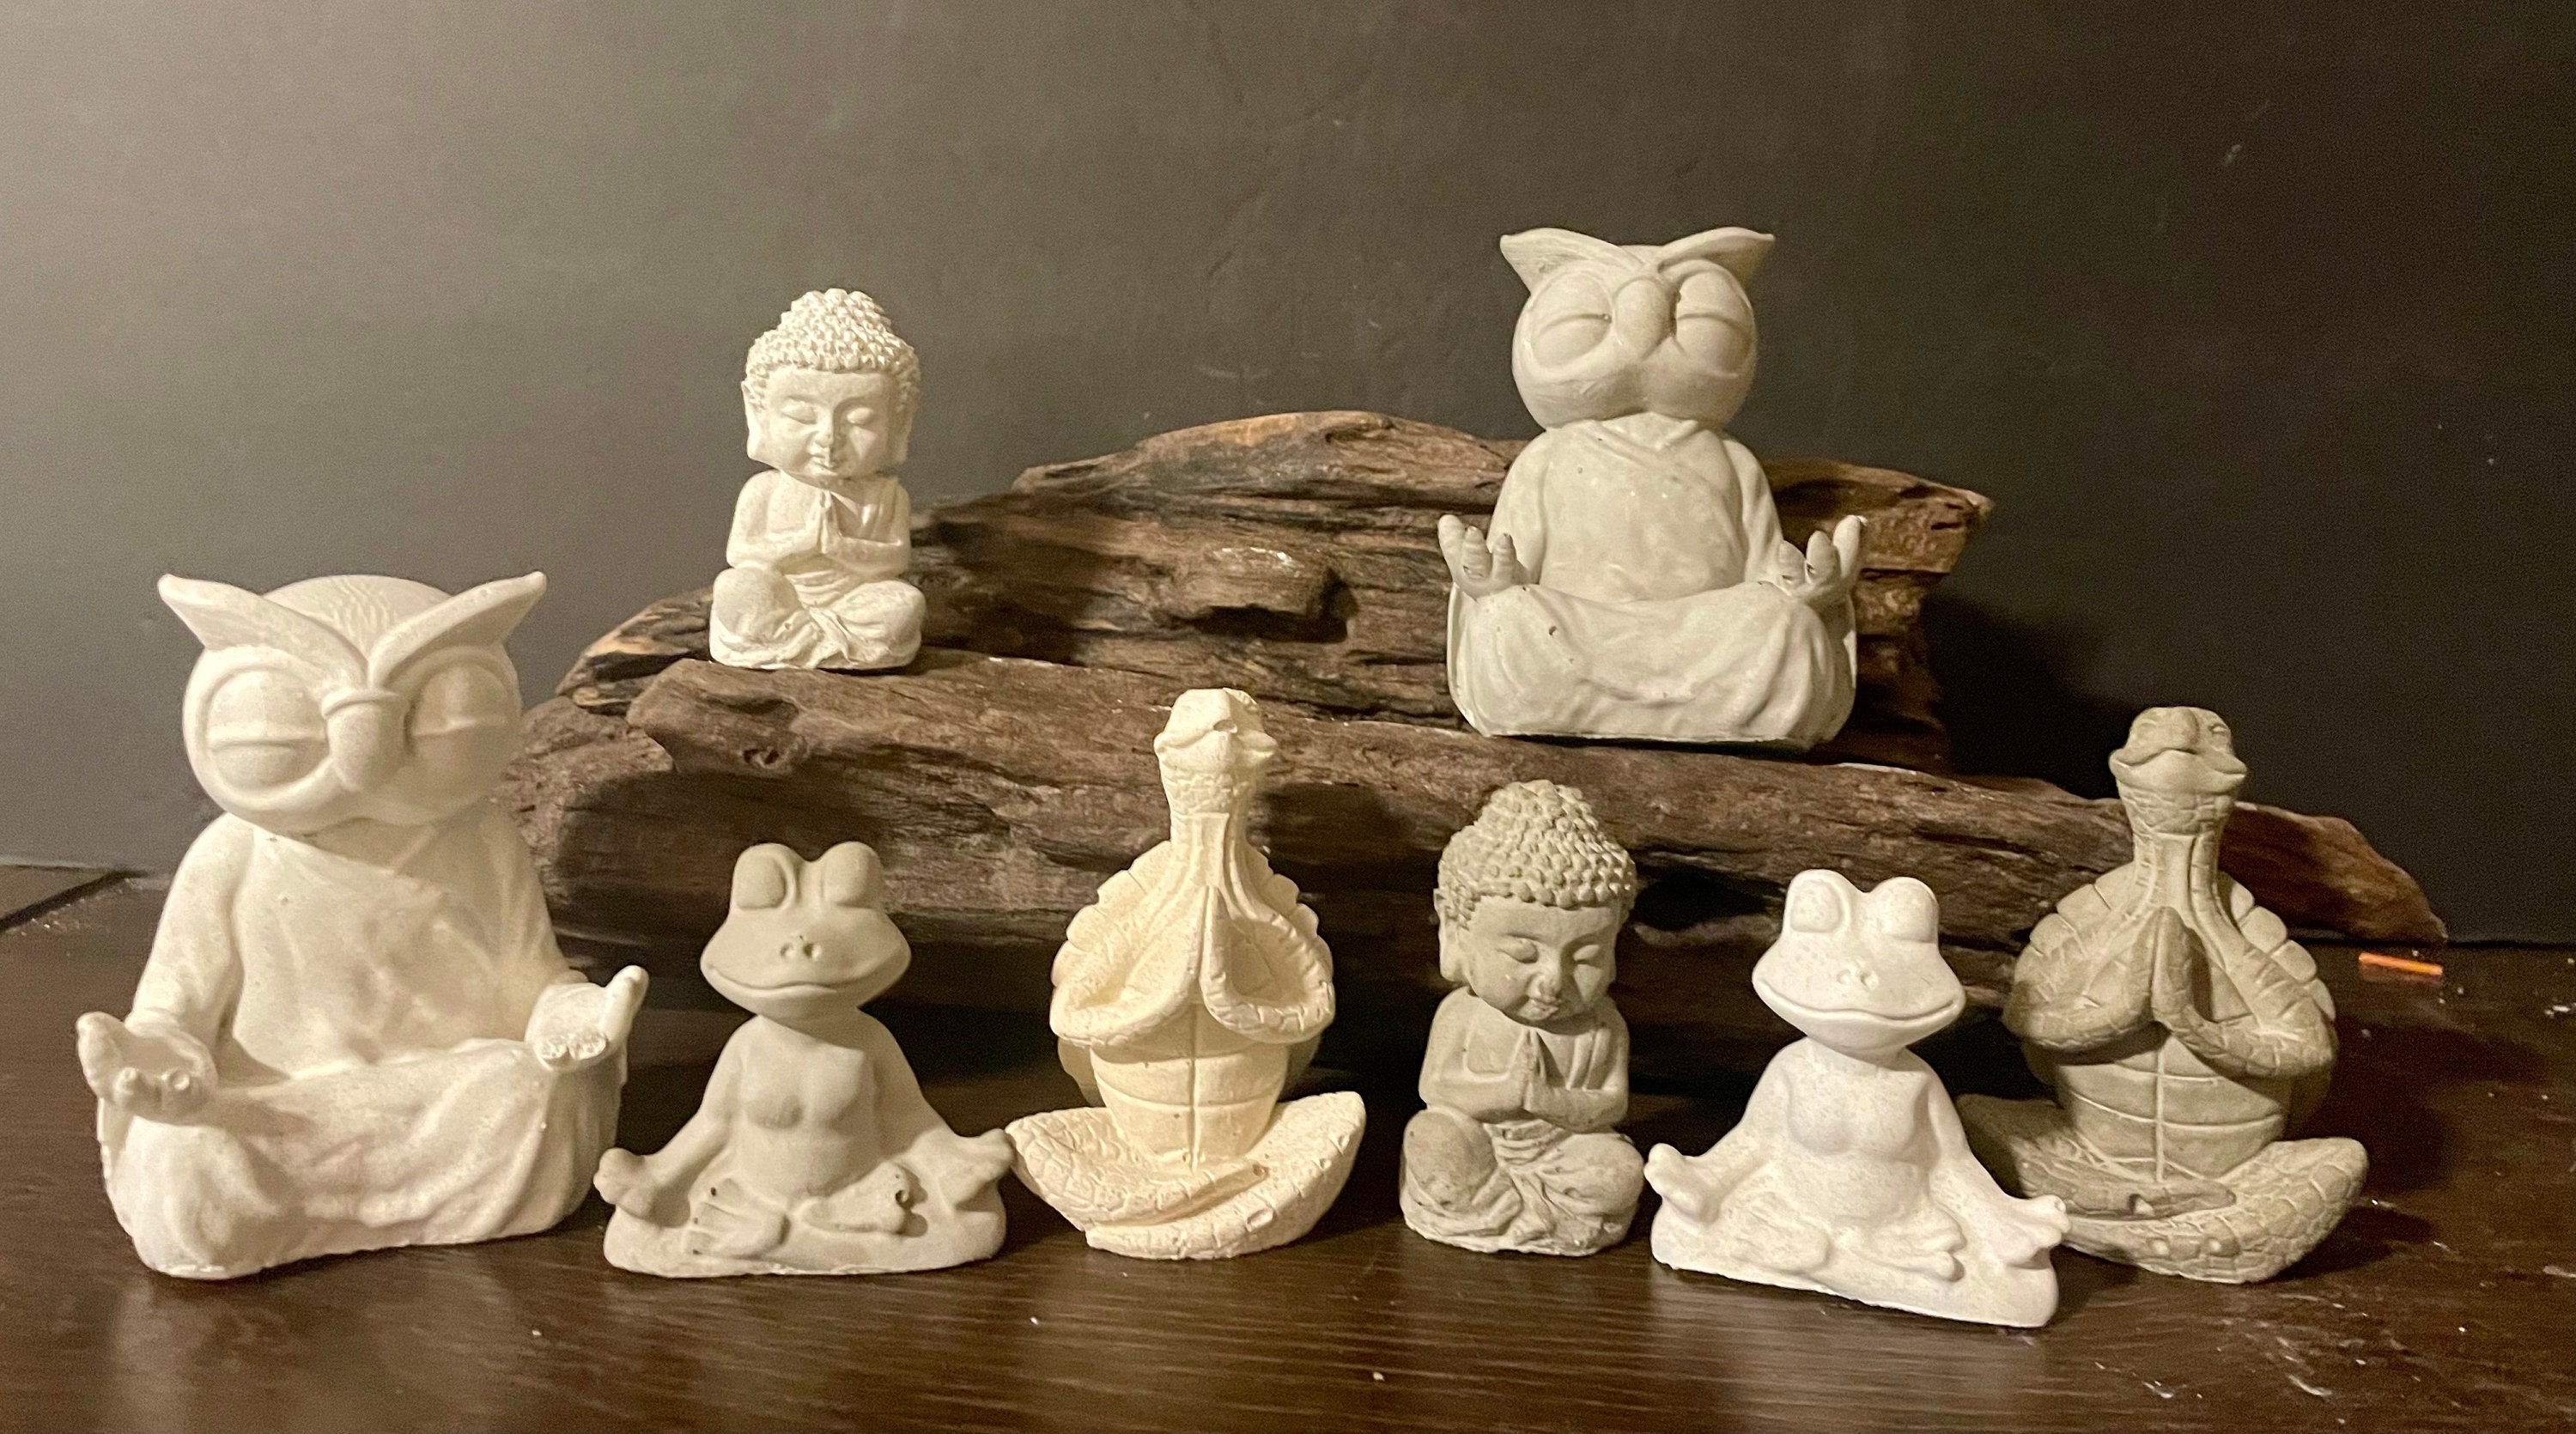  OwMell Meditation Yoga Pose Statue, Ceramic Room décor